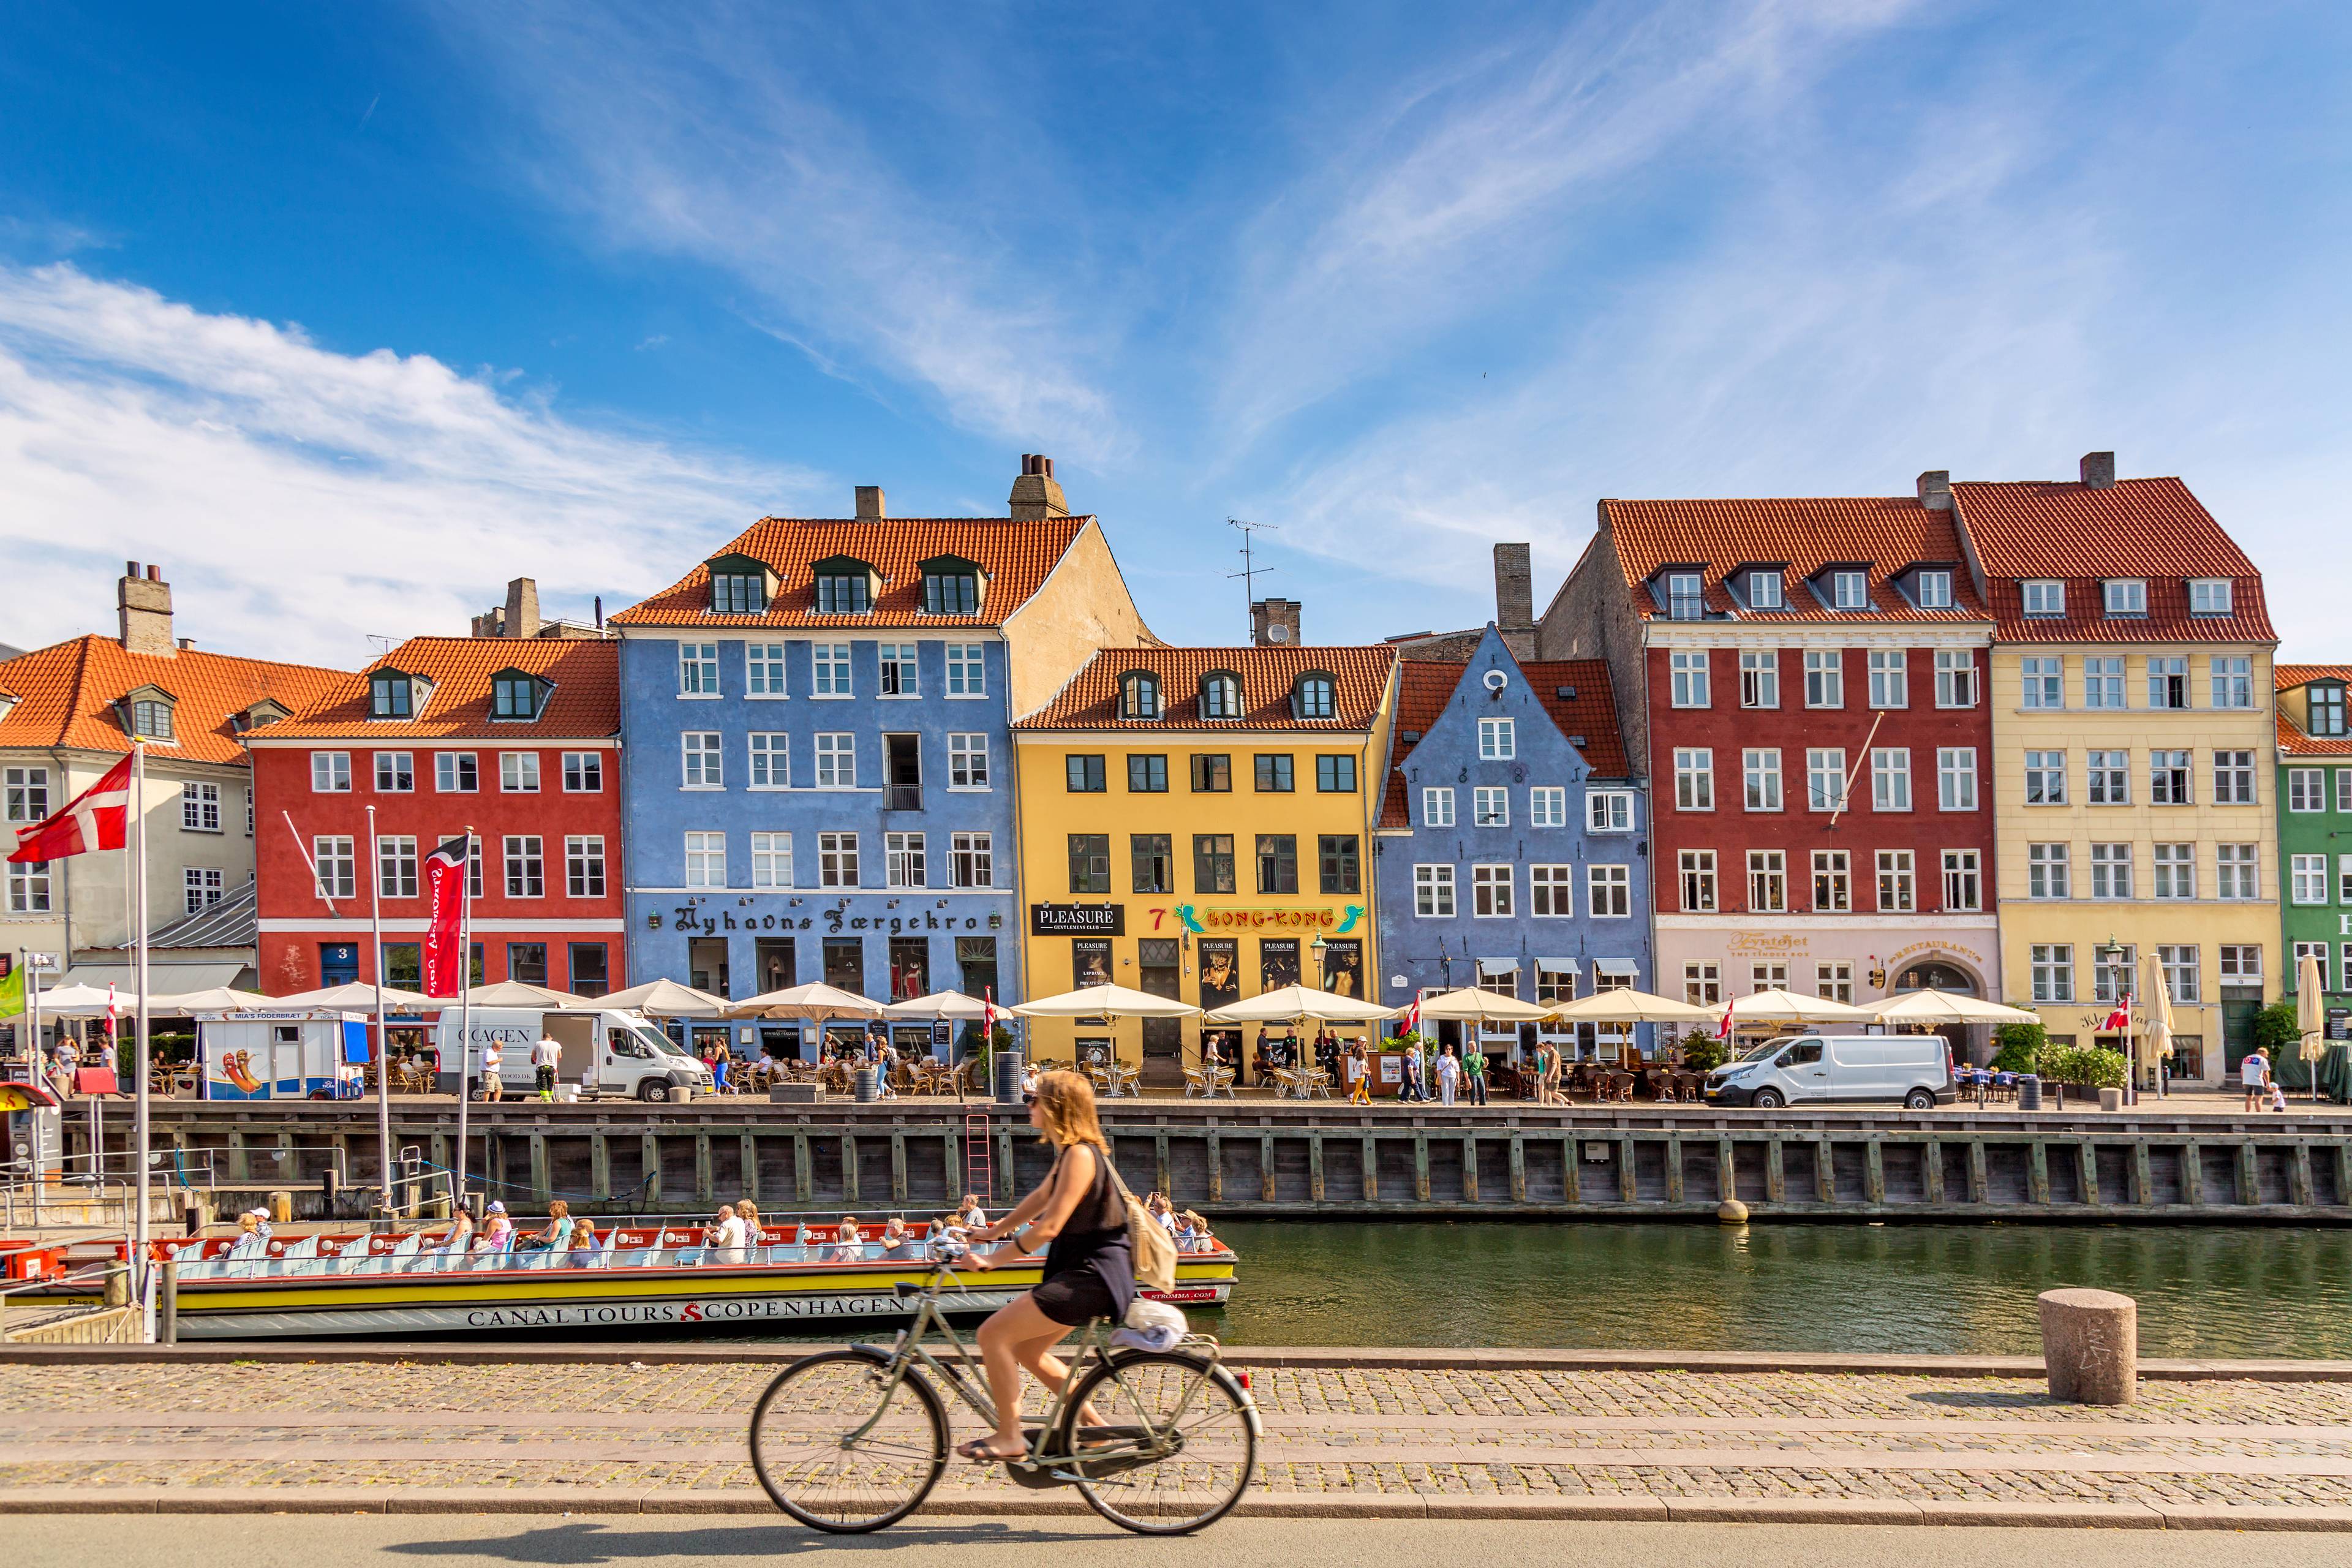 Время в копенгагене сейчас. Копенгаген столица Дании. Нюхавн Копенгаген. Копенгаген набережная Ньюхавн. Столица Дании Копенгаген фото.